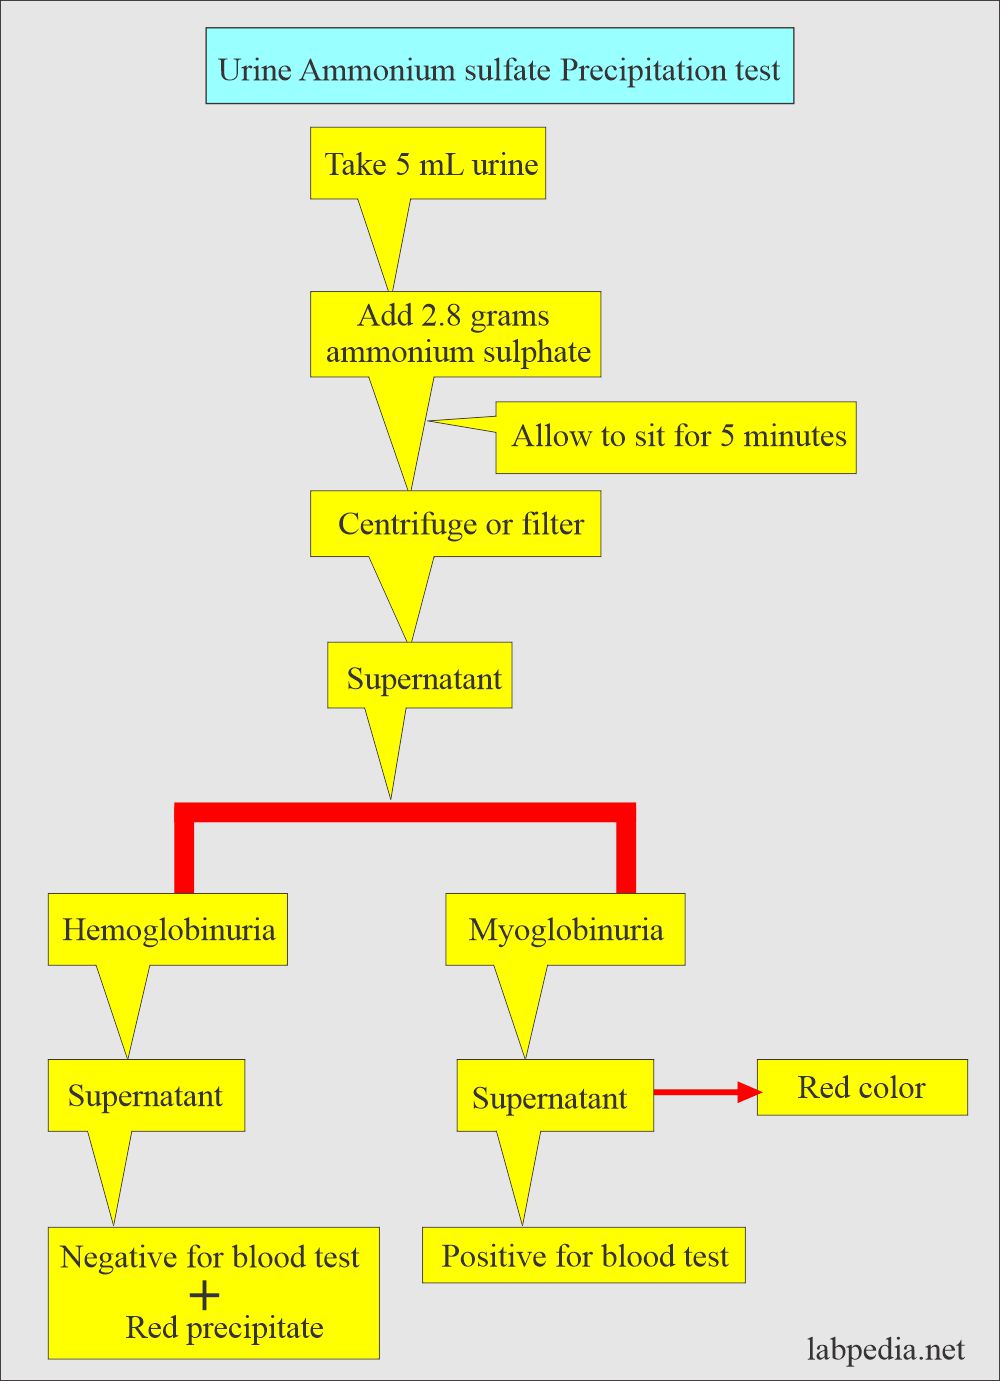 Urine ammonium sulfate test for the D/D of hemoglobinuria and myoglobinuria